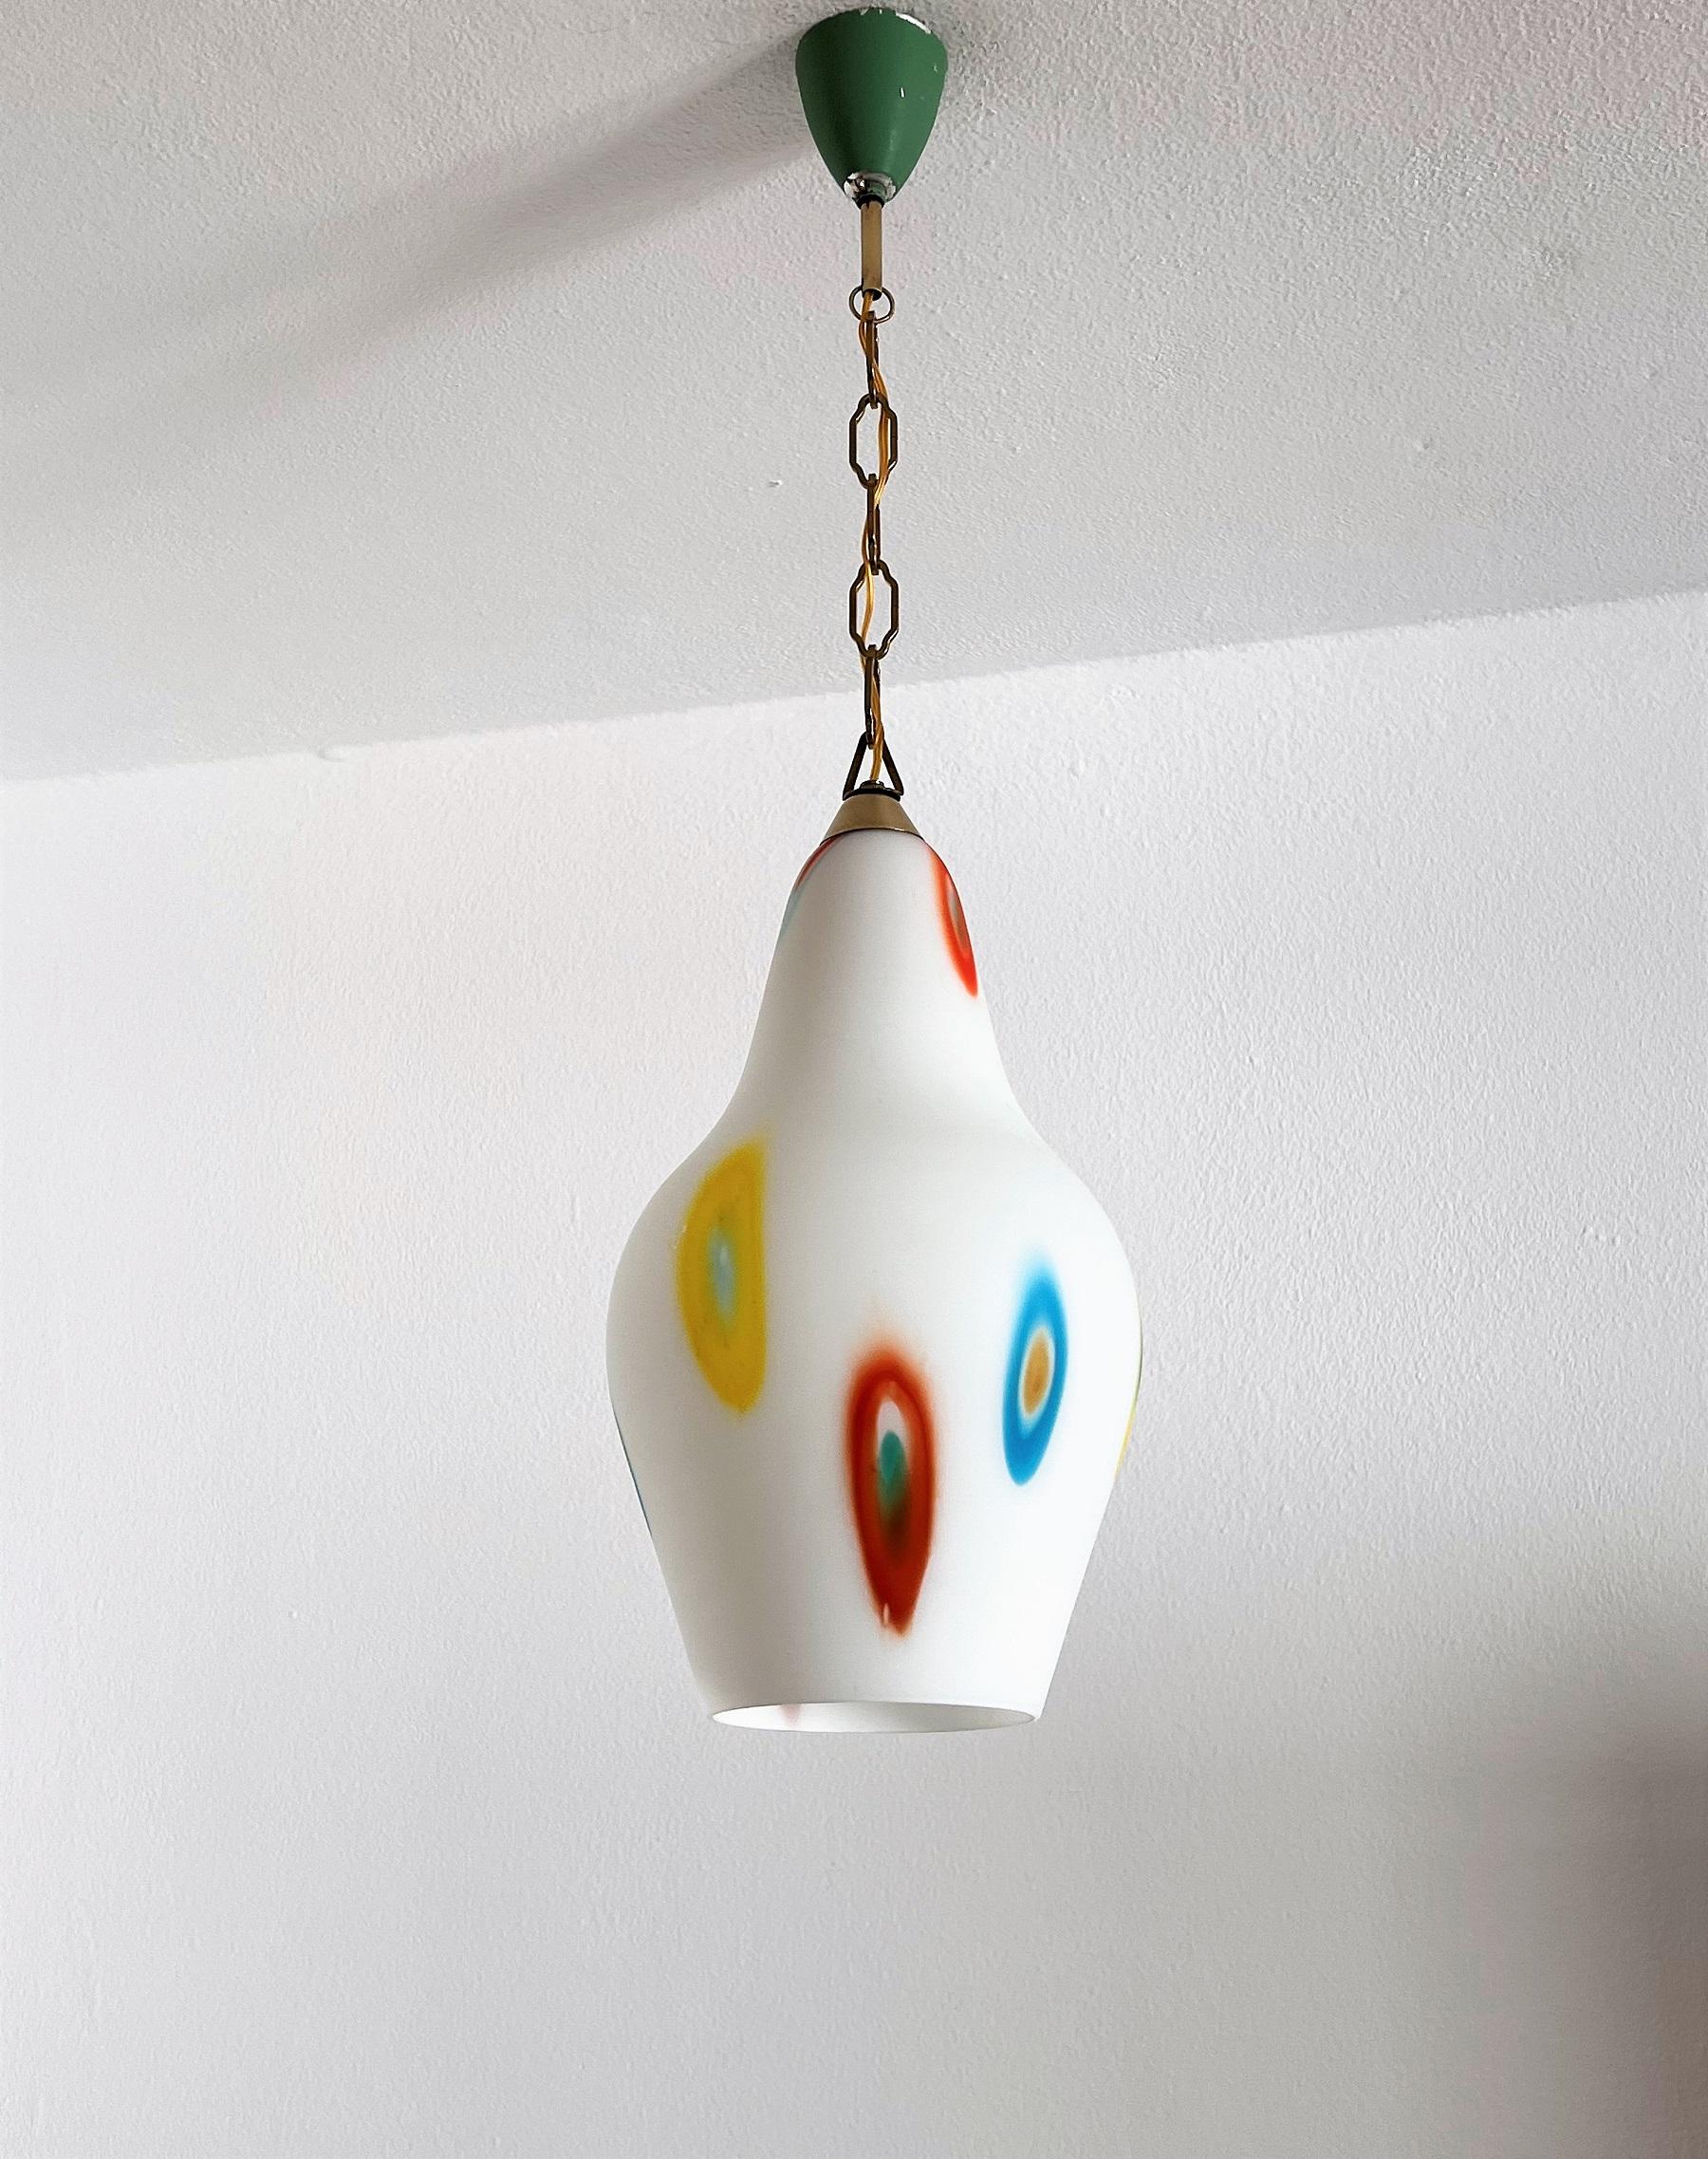 Italian Midcentury Murano Glass Pendant Lights with Colorful Murrine, 1970s For Sale 4